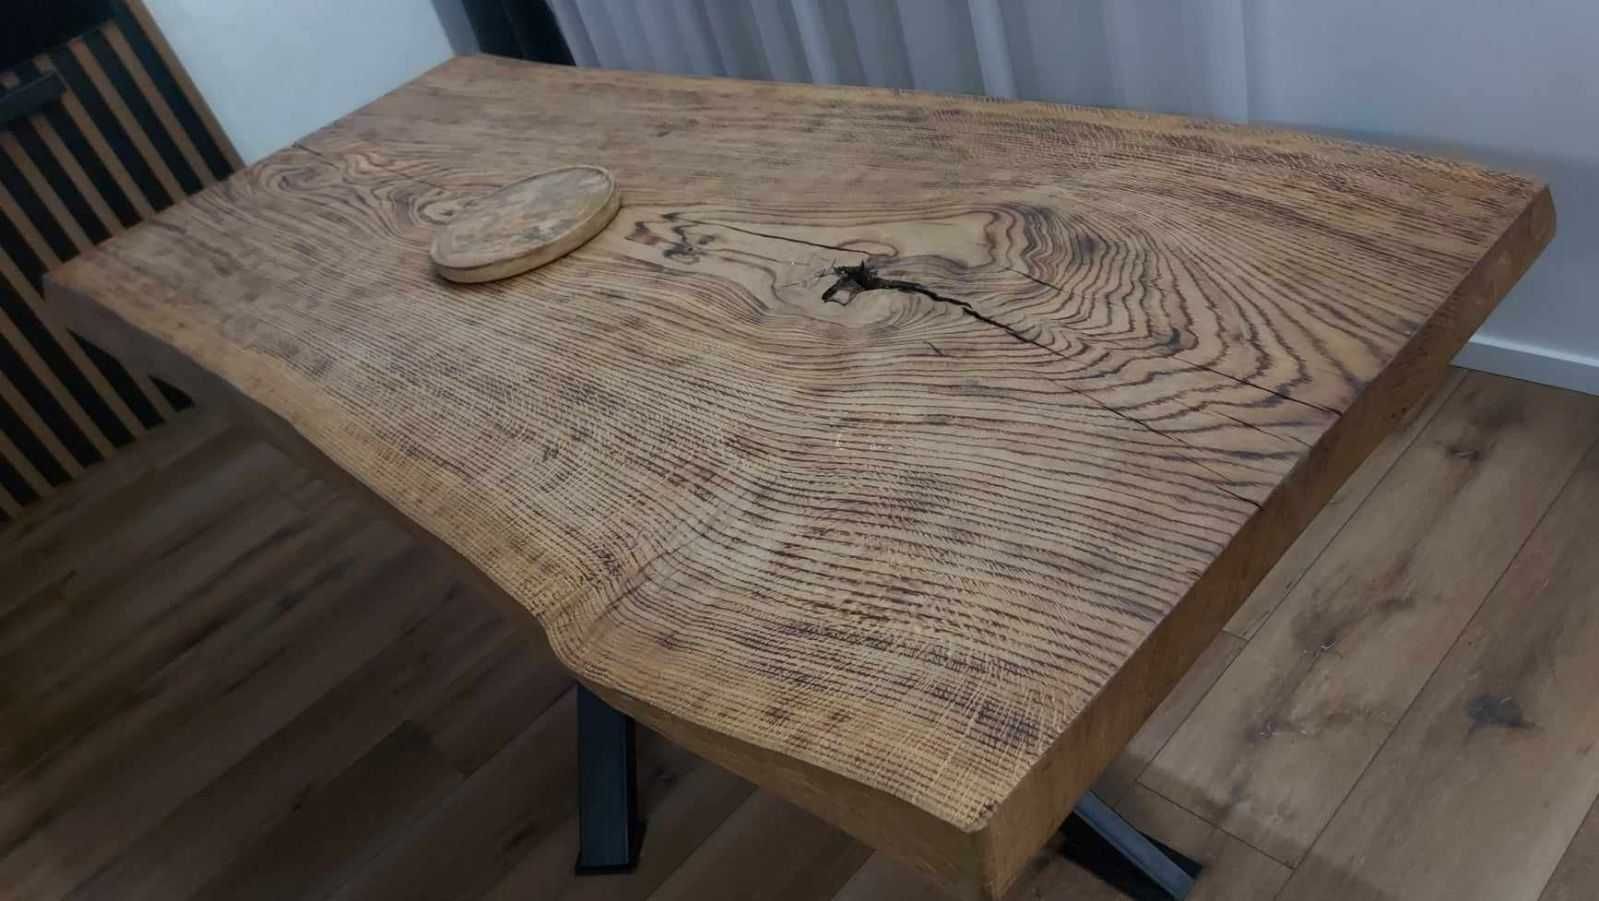 Dębowy stół monolit 220cm ×80cm×9cm